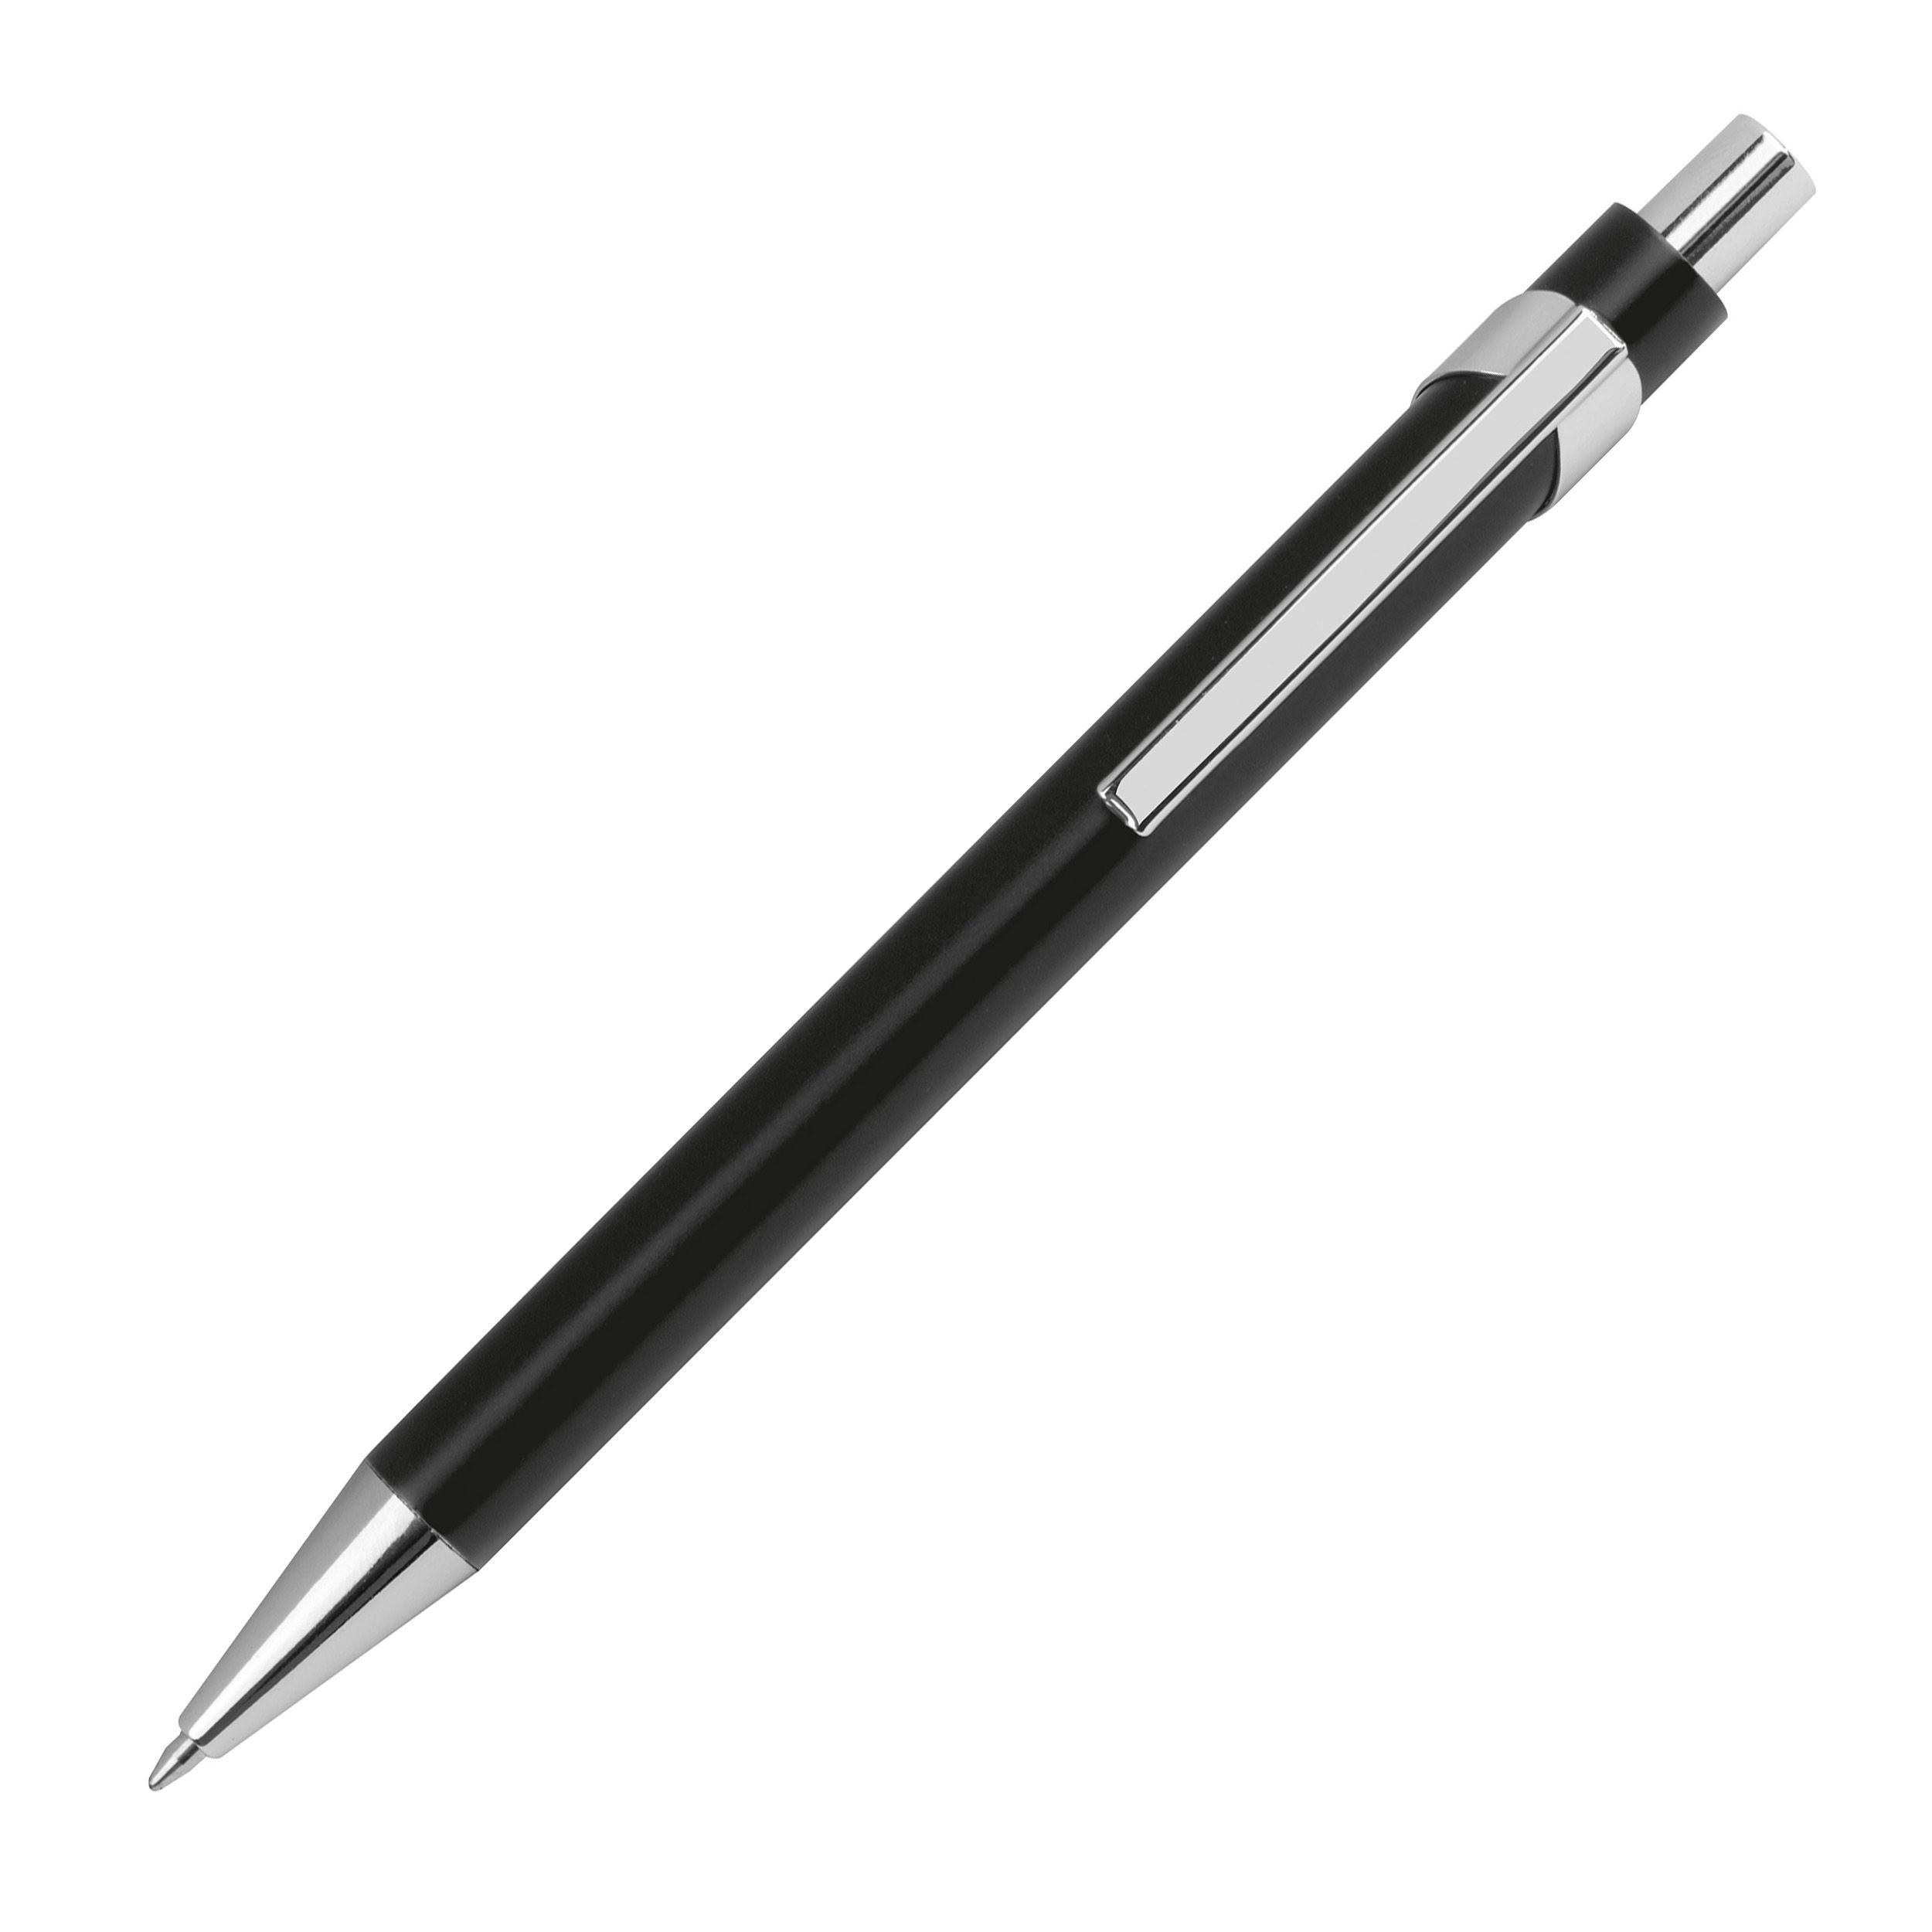 Kugelschreiber aus Metall, schwarz